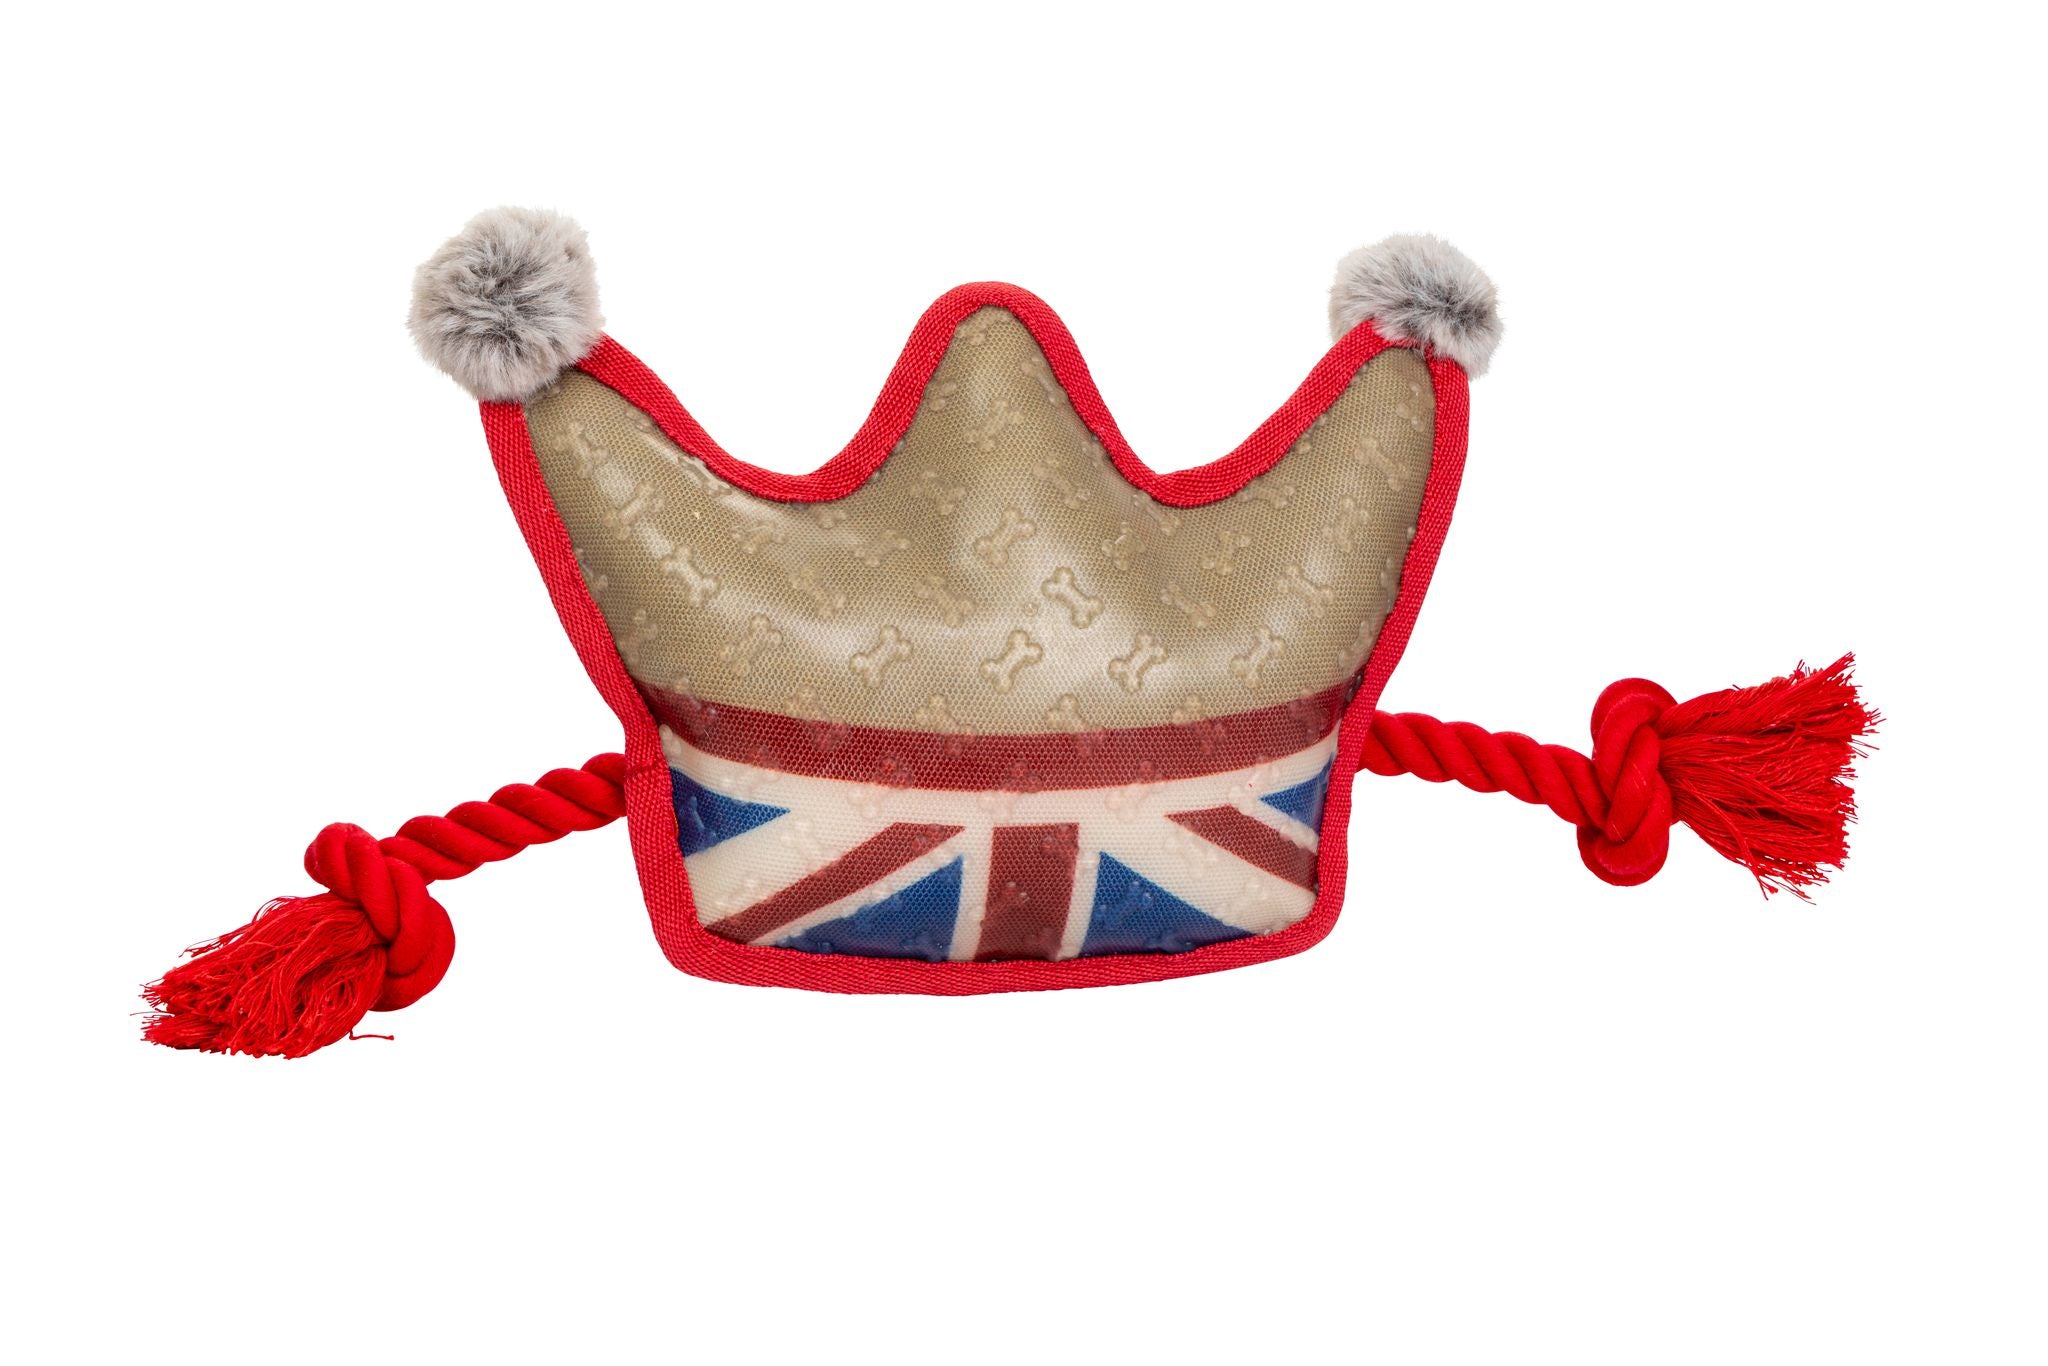 Union Jack Crown Toy